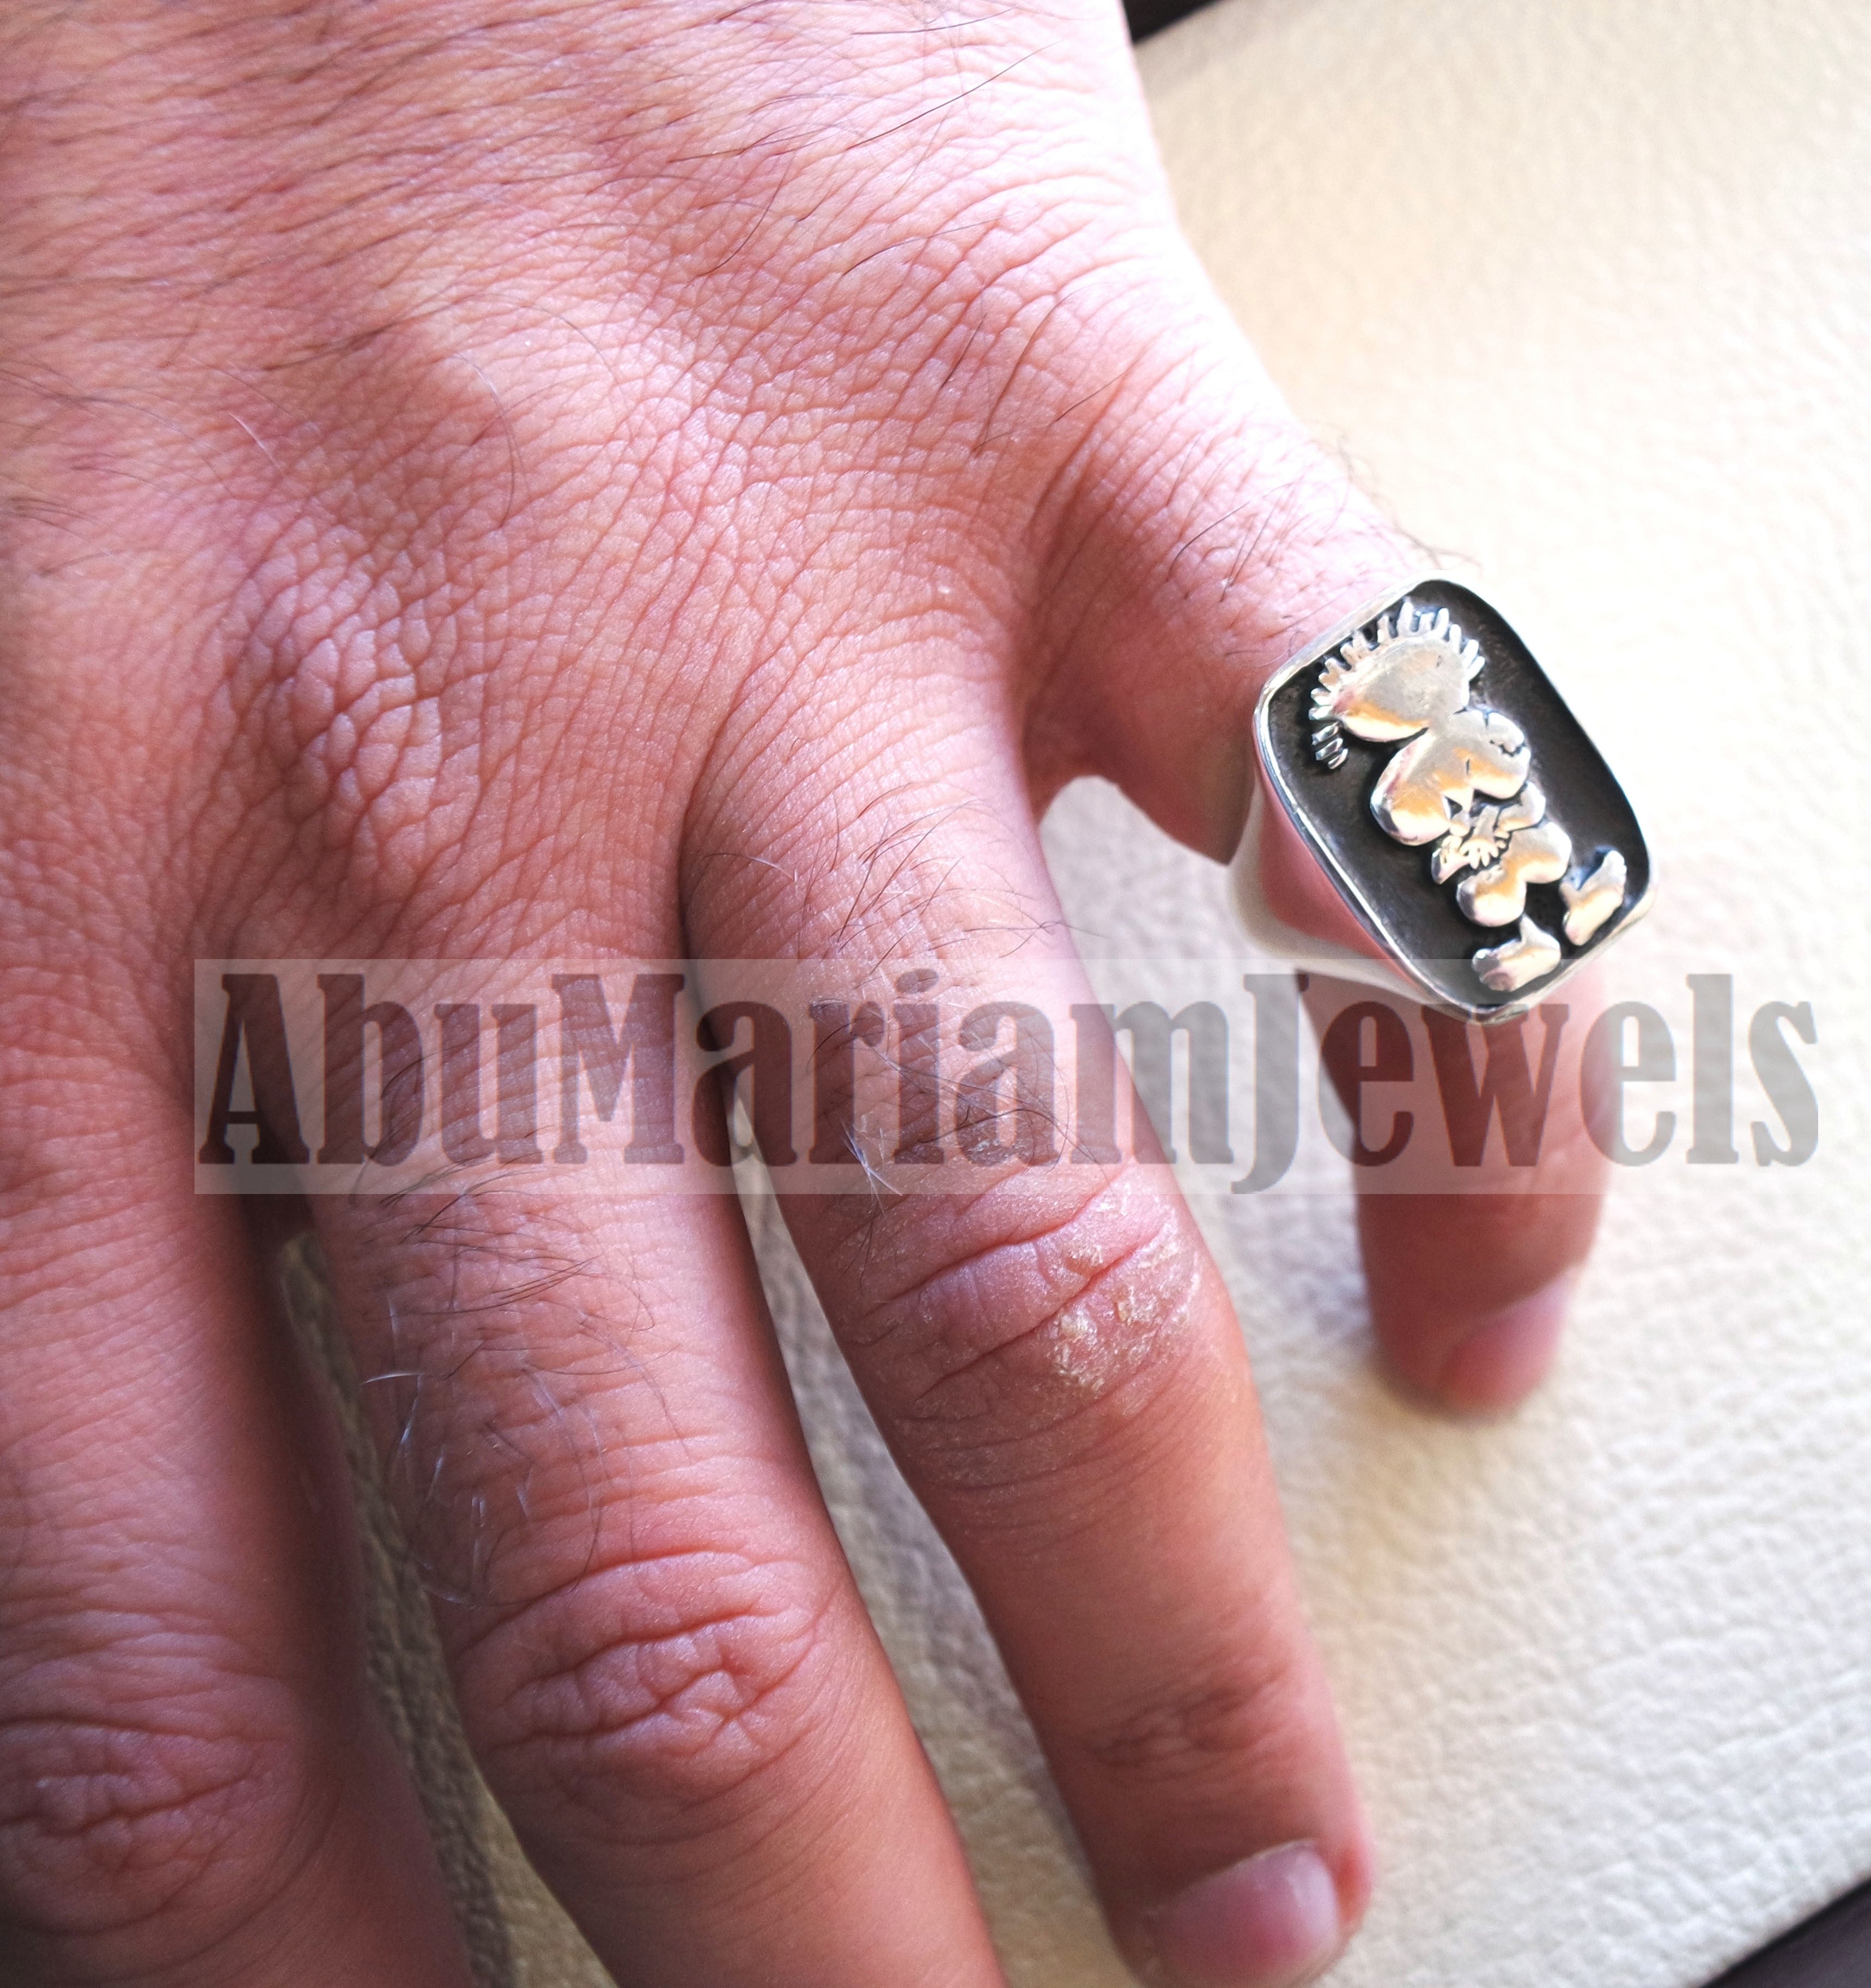 Handala sterling silver 925 man ring , palestine symbol refugee symbol heavy jewelry piece all sizes فلسطين حنضله حنظله